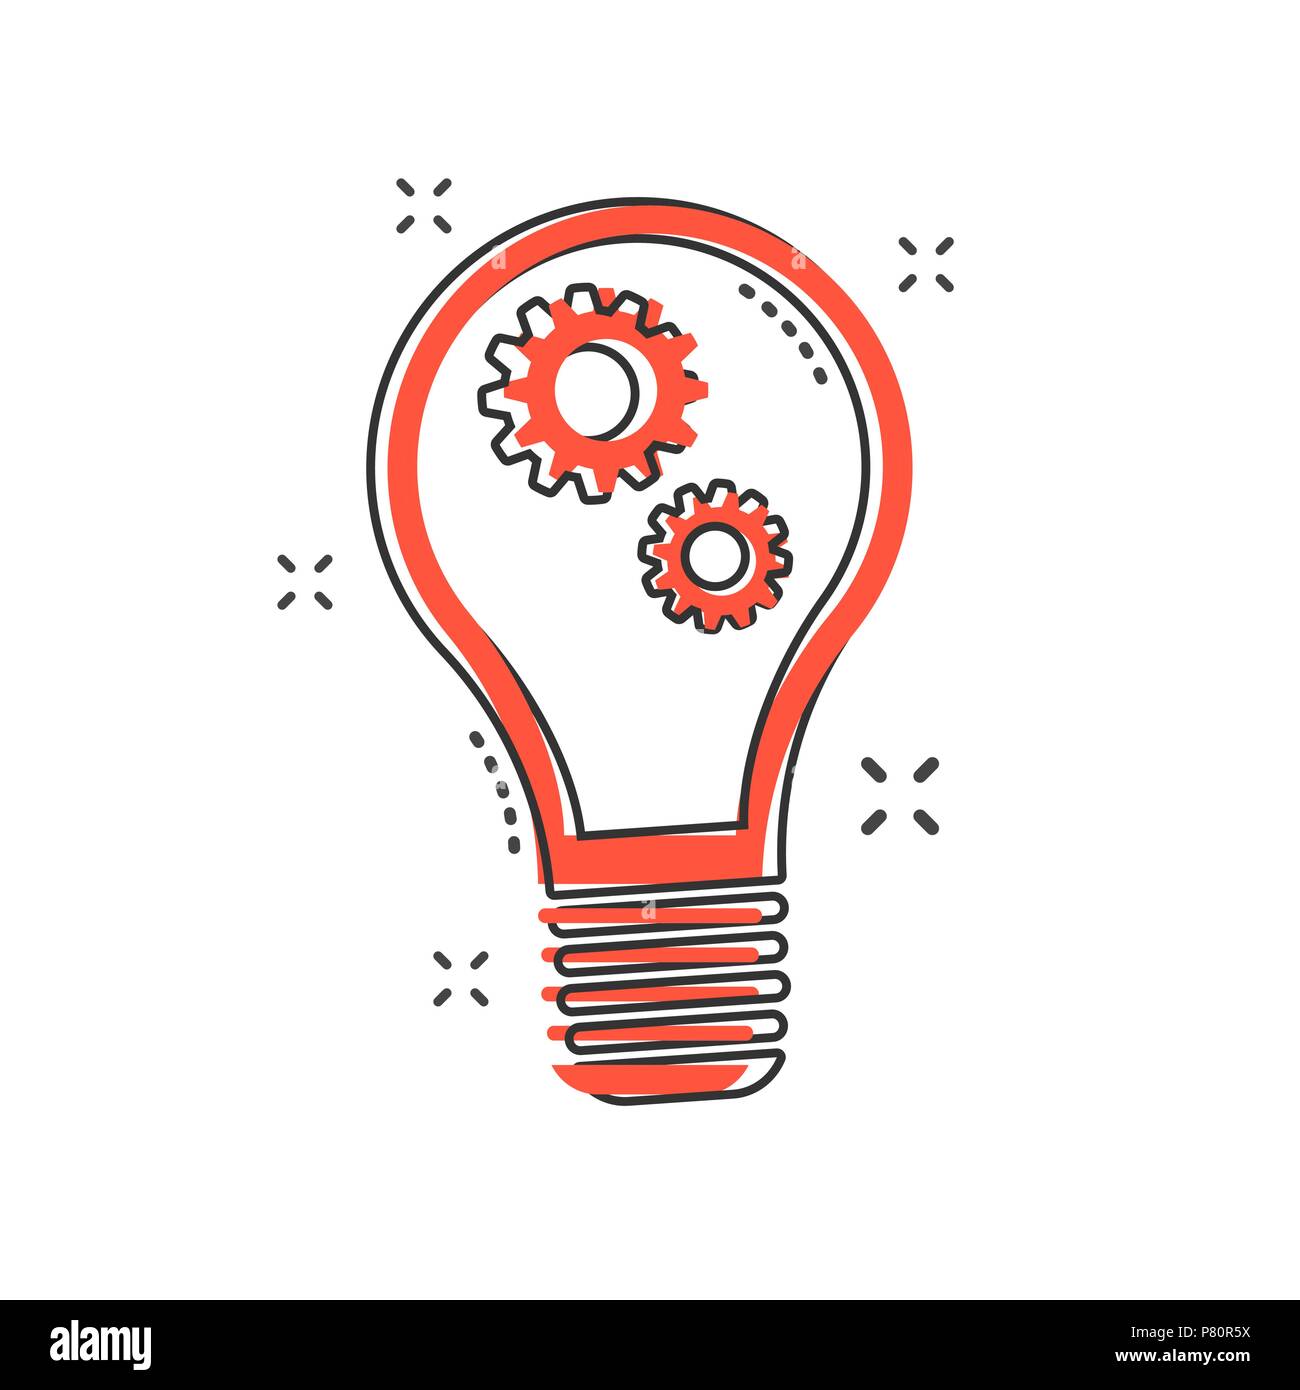 Cartoon Glühbirne mit Zahnrad-symbol im Comic-stil. Glühlampe Idee  Abbildung Piktogramm. Lampe Anmeldung splash Geschäftskonzept  Stock-Vektorgrafik - Alamy